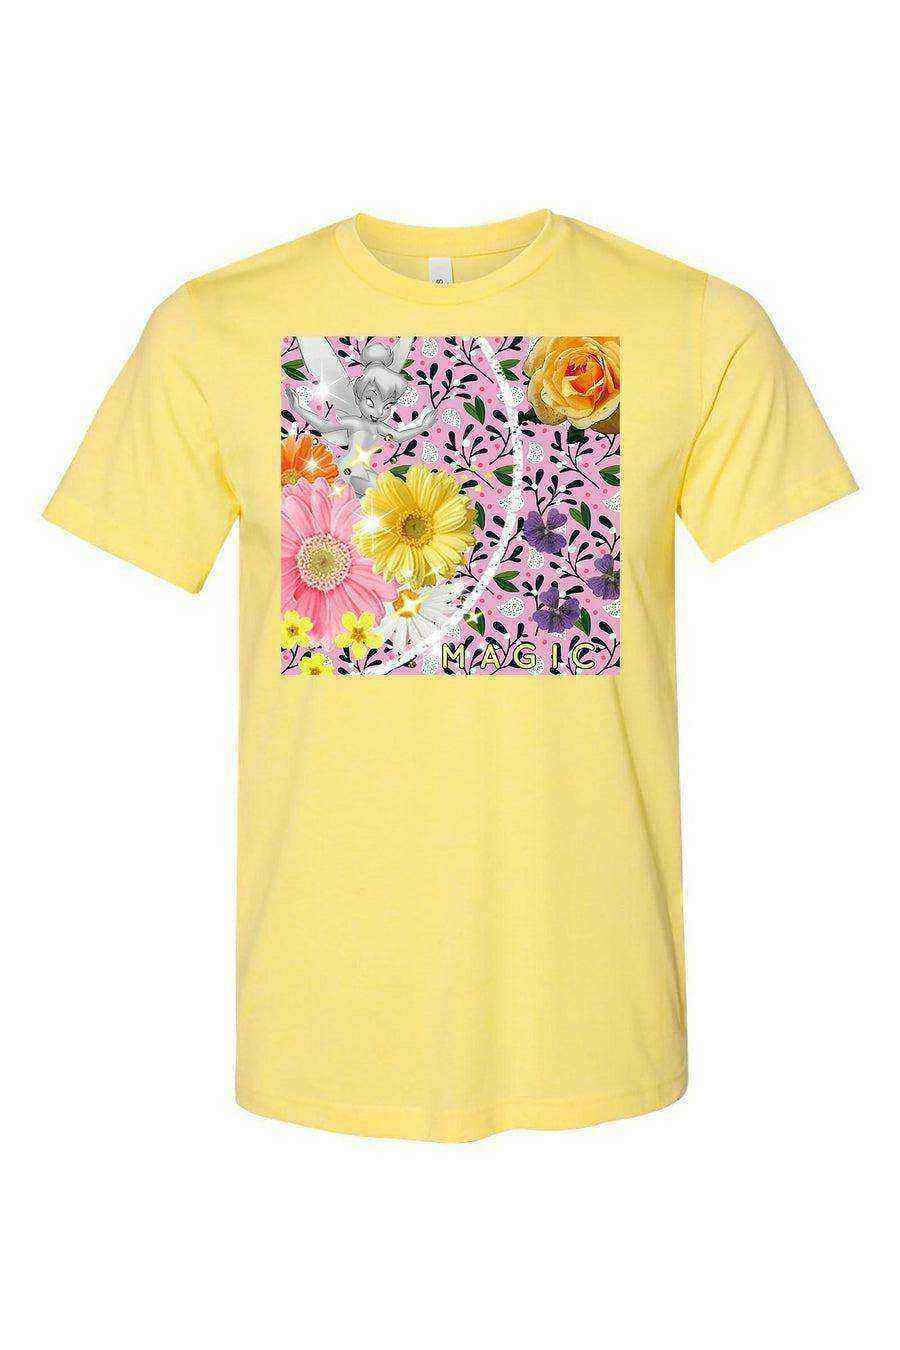 Tinker Bell Floral Shirt | Peter Pan Shirt - Dylan's Tees